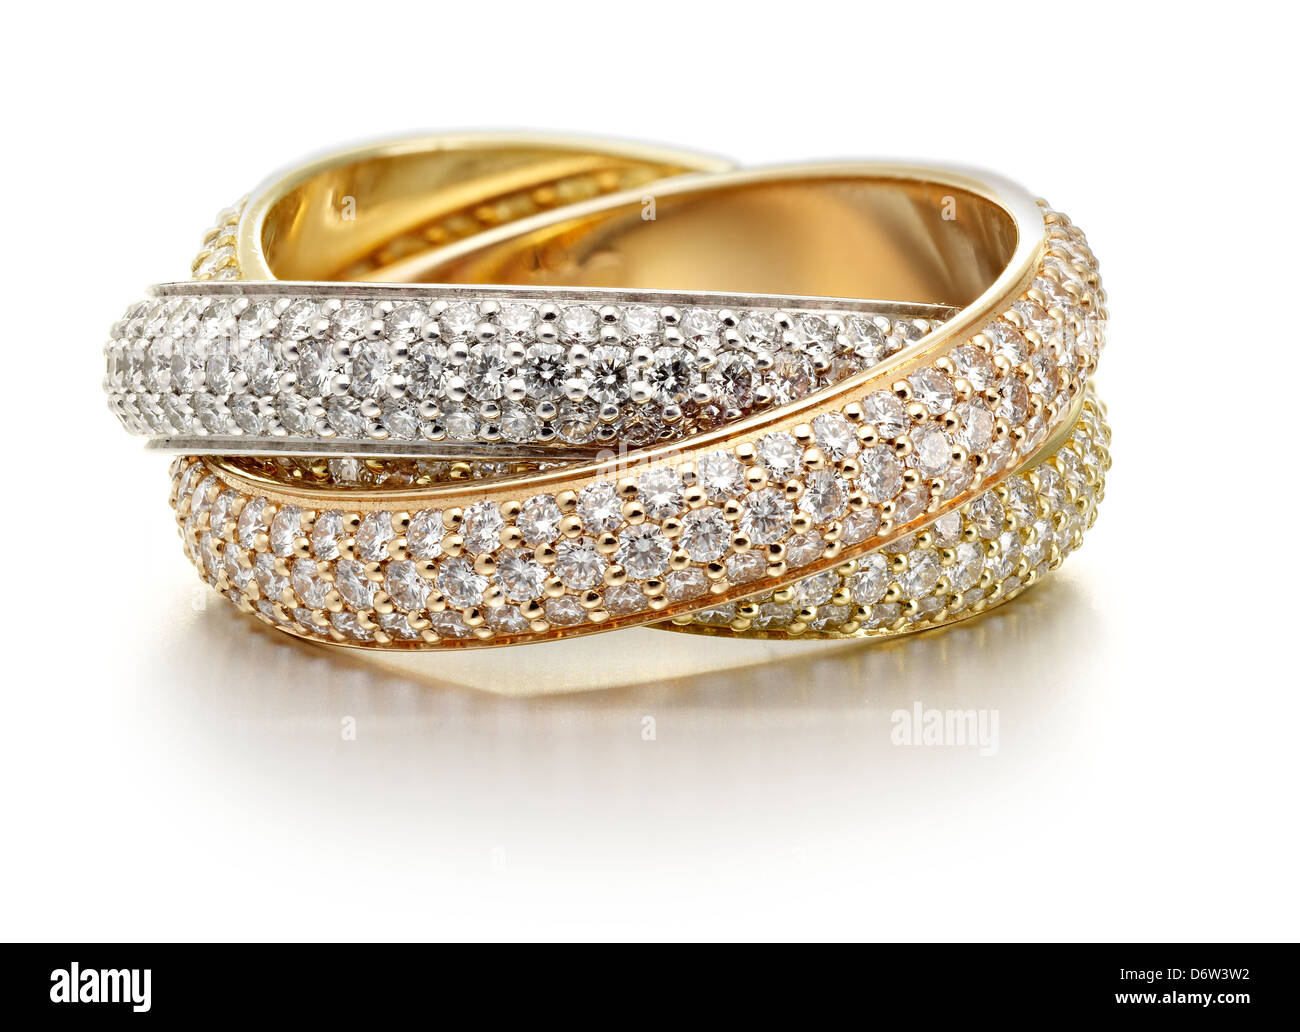 3 couleur or bagues à diamant mariage russe Photo Stock - Alamy